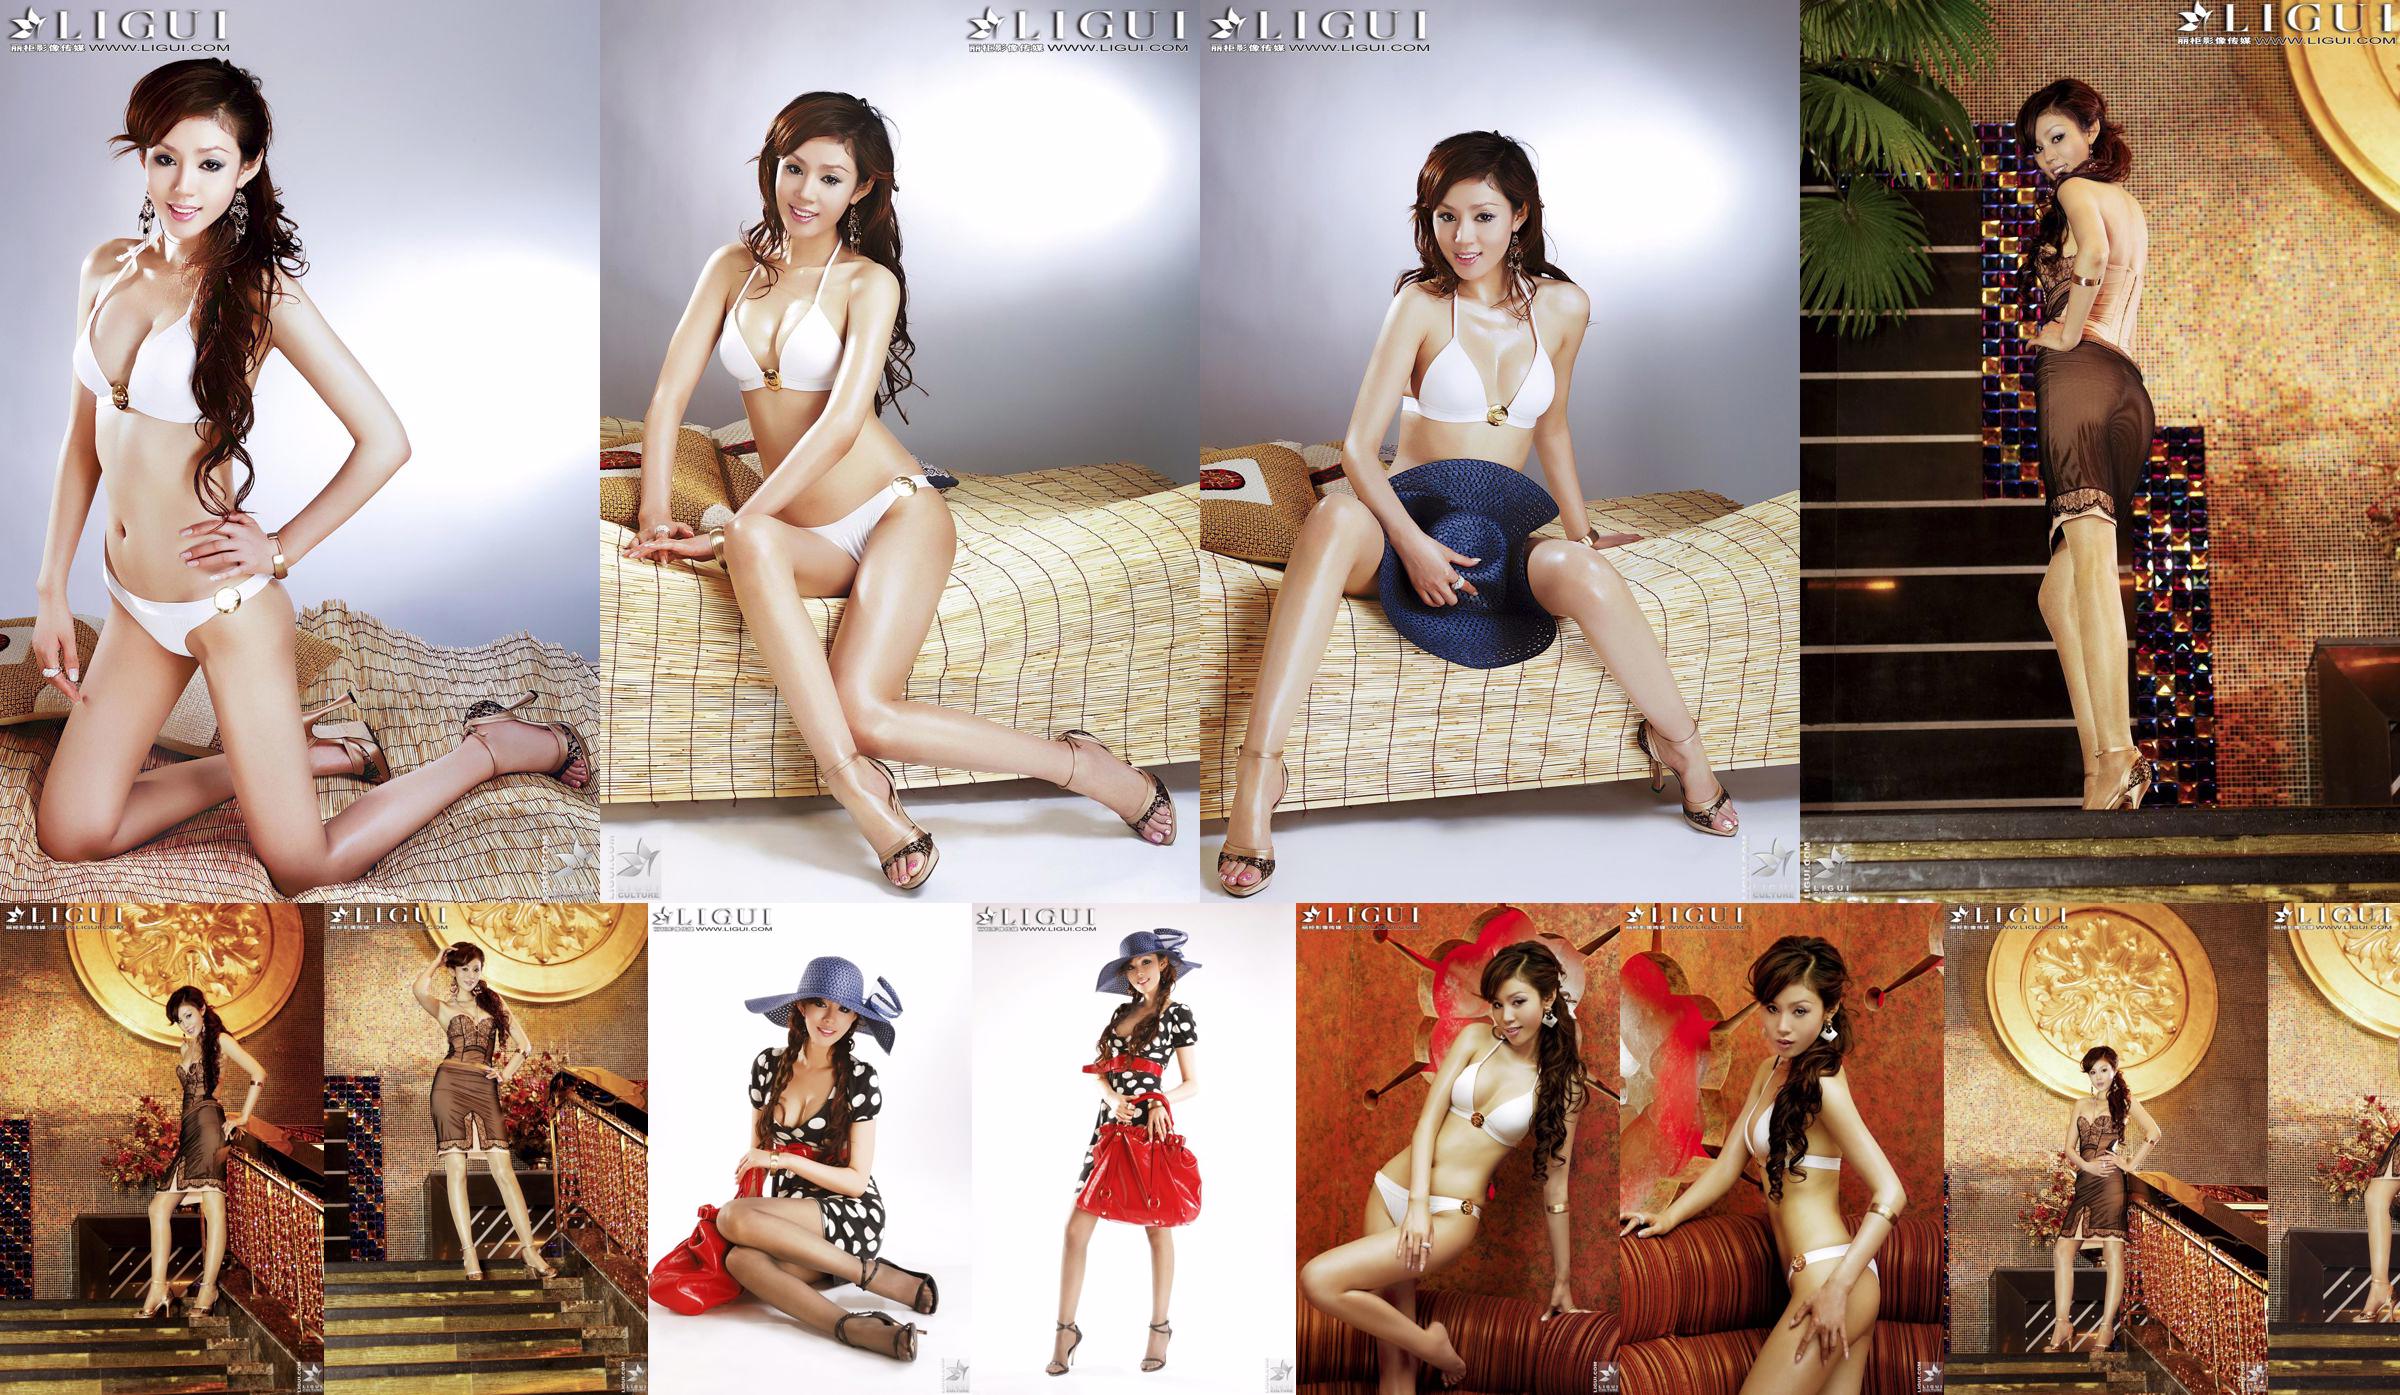 [丽 柜 LiGui] Foto de "Bikini + Vestido" de la modelo Yao Jinjin con hermosas piernas y pies sedosos No.36e8c5 Página 10